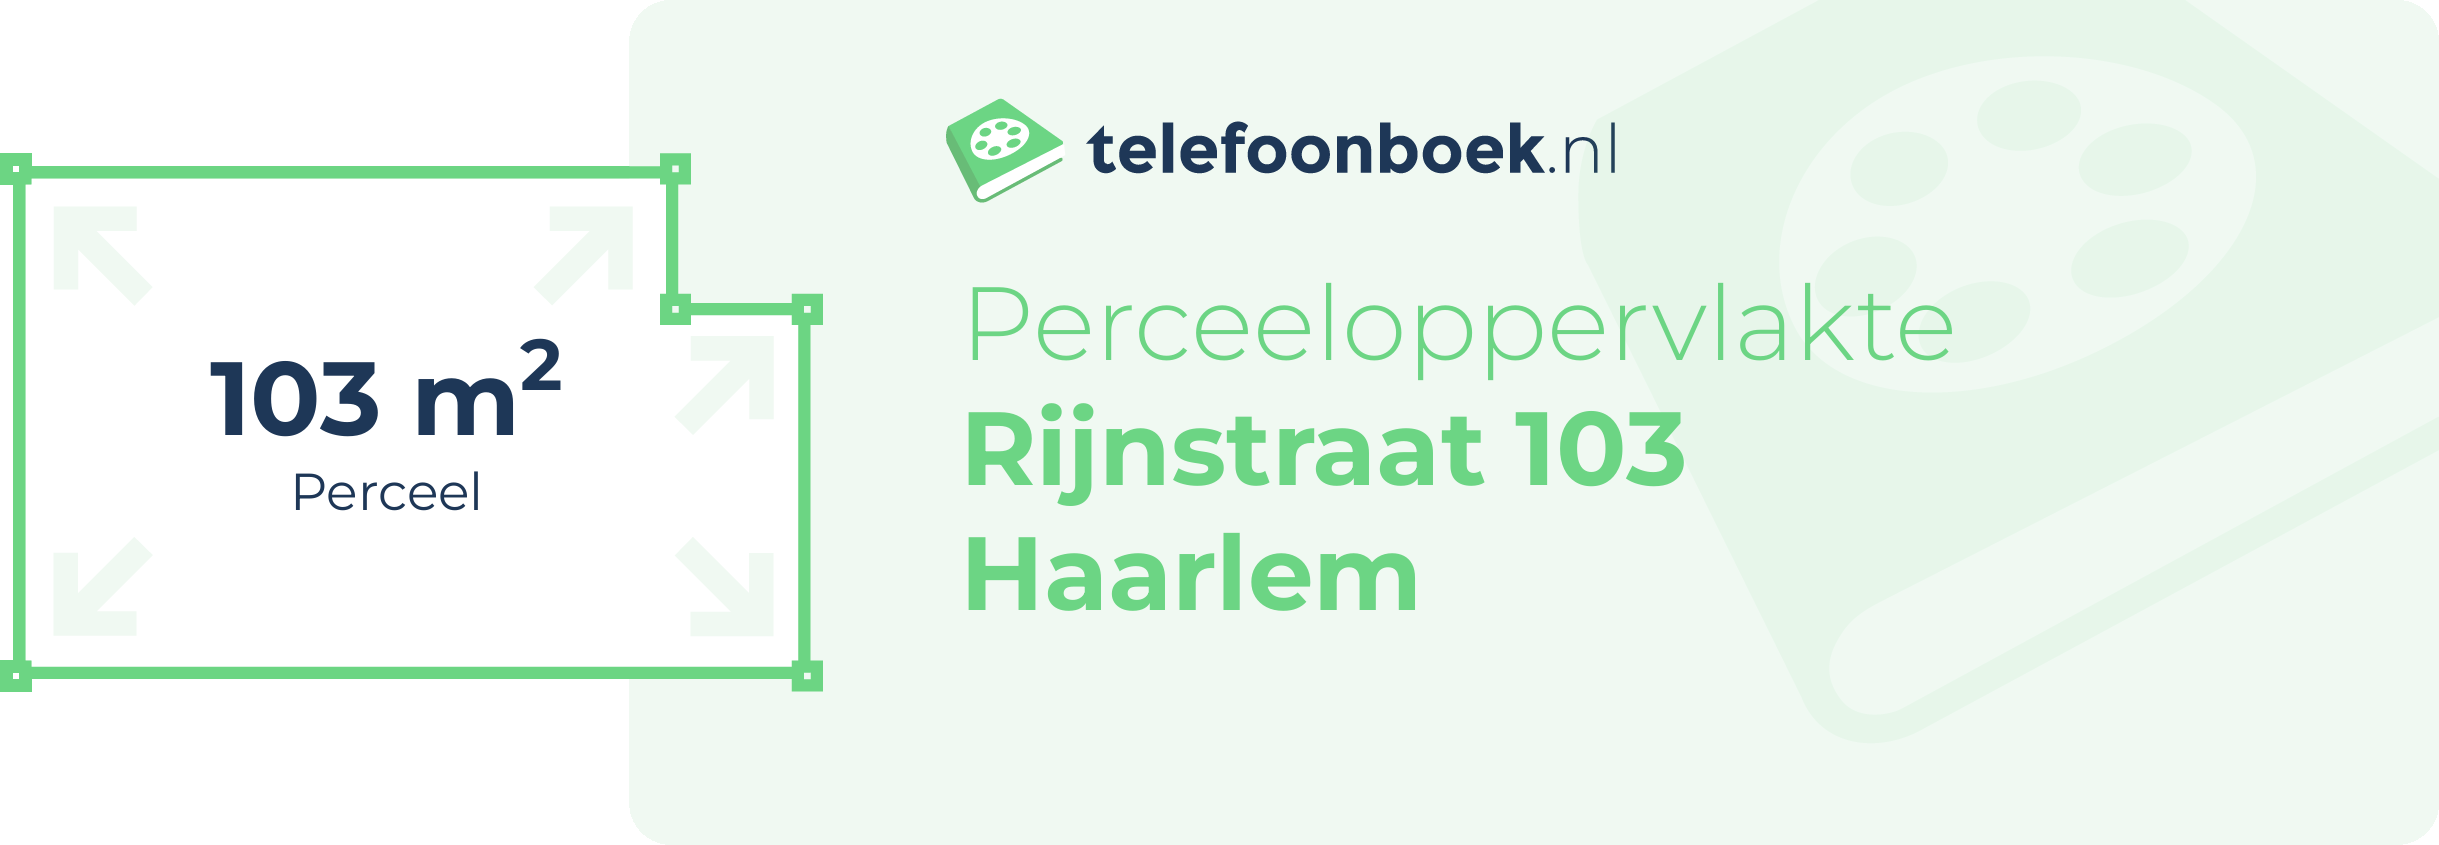 Perceeloppervlakte Rijnstraat 103 Haarlem